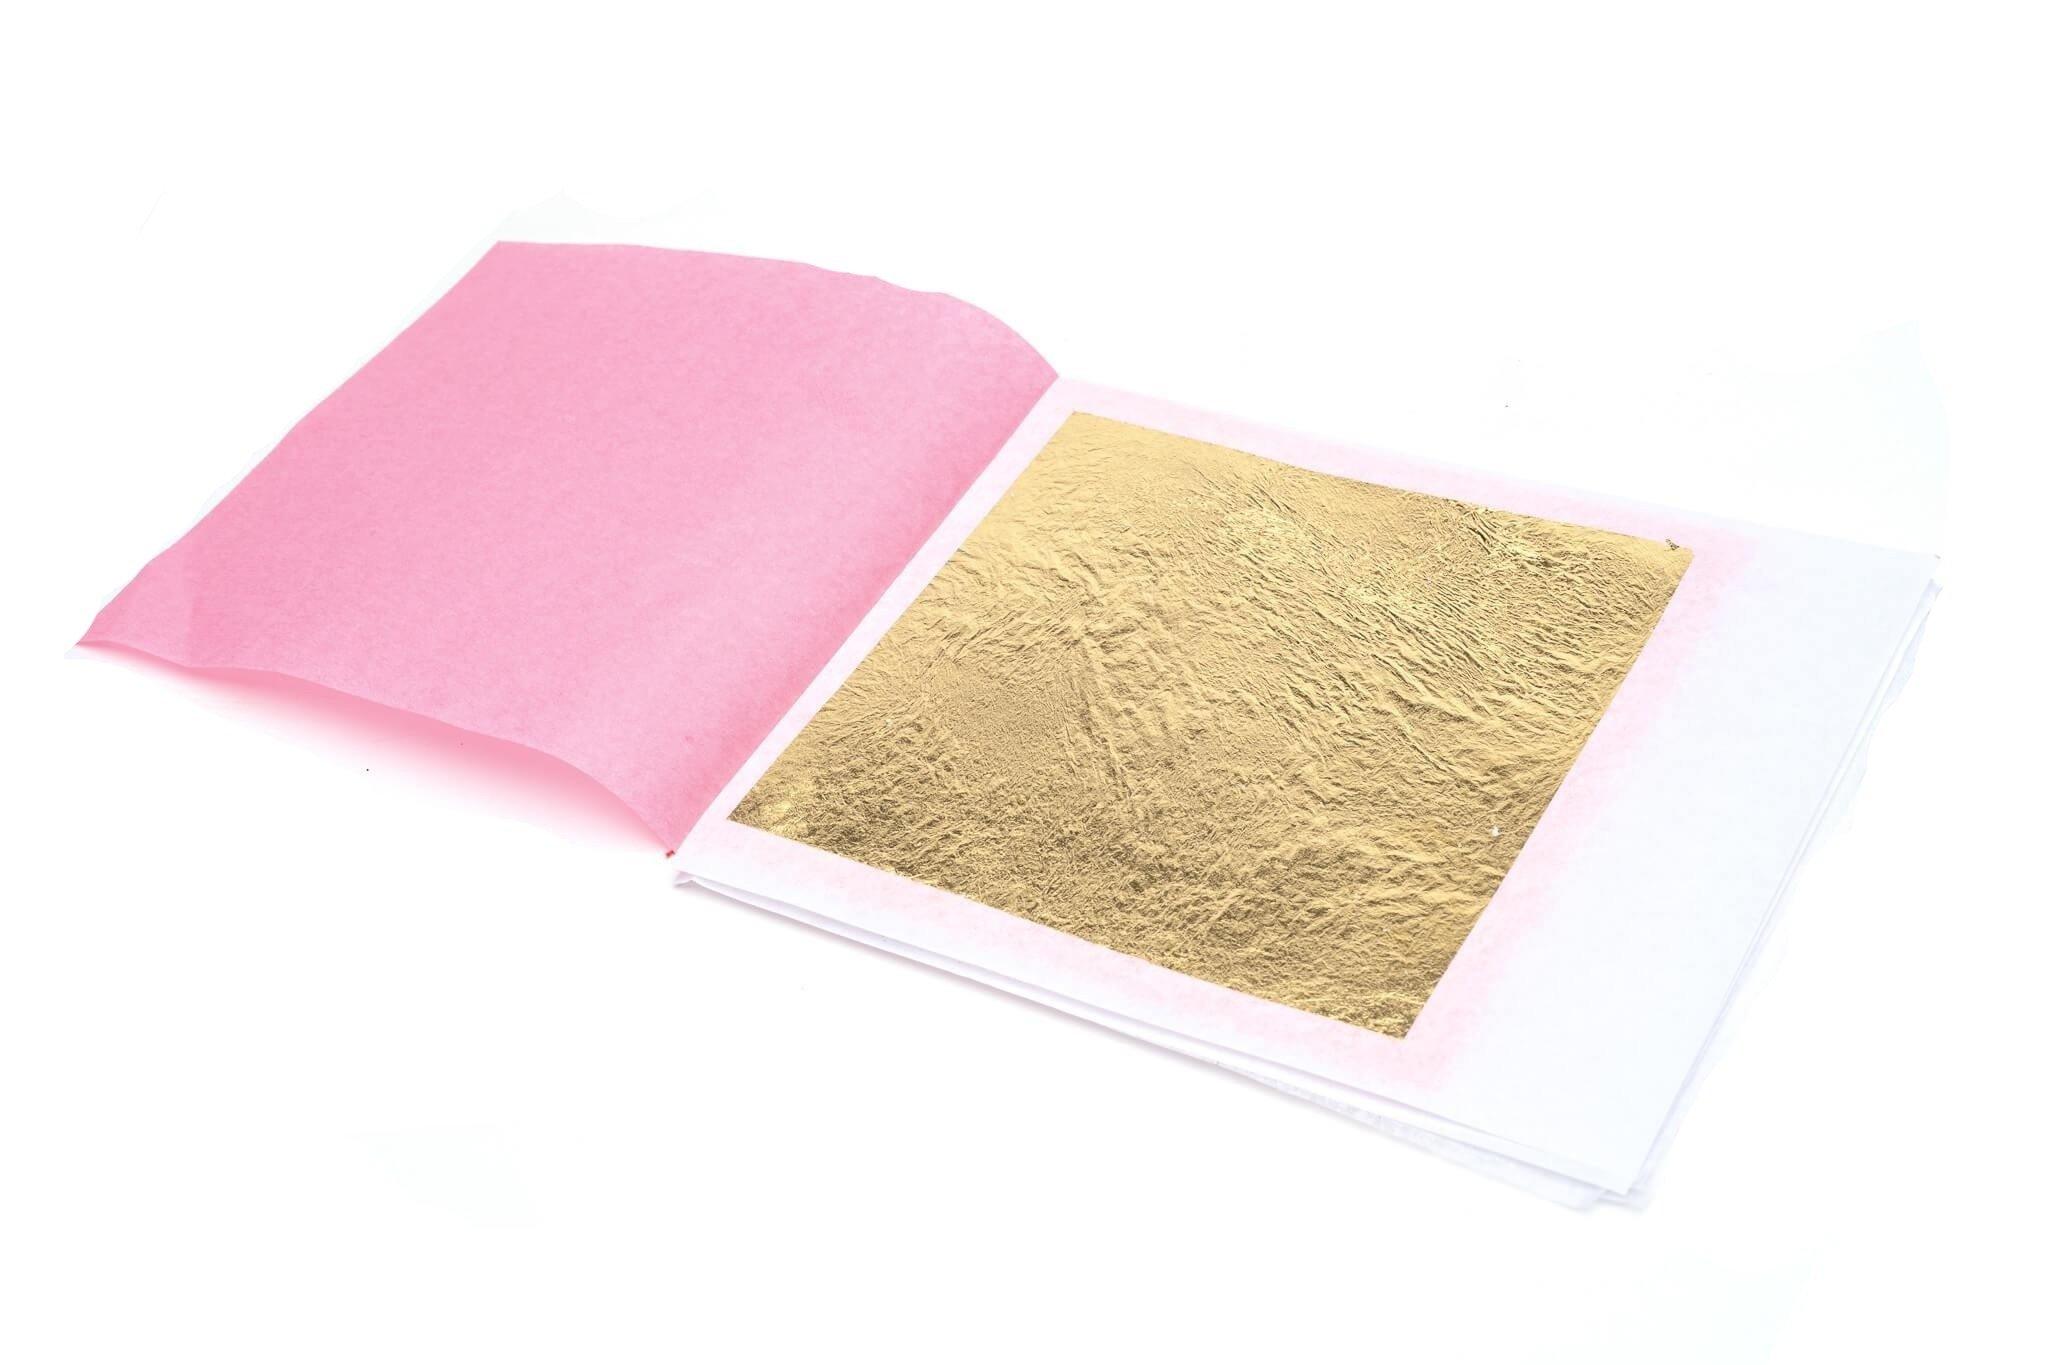 24K Edible Gold Transfer Sheets, Soft Press Metal leaf Slofoodgroup 